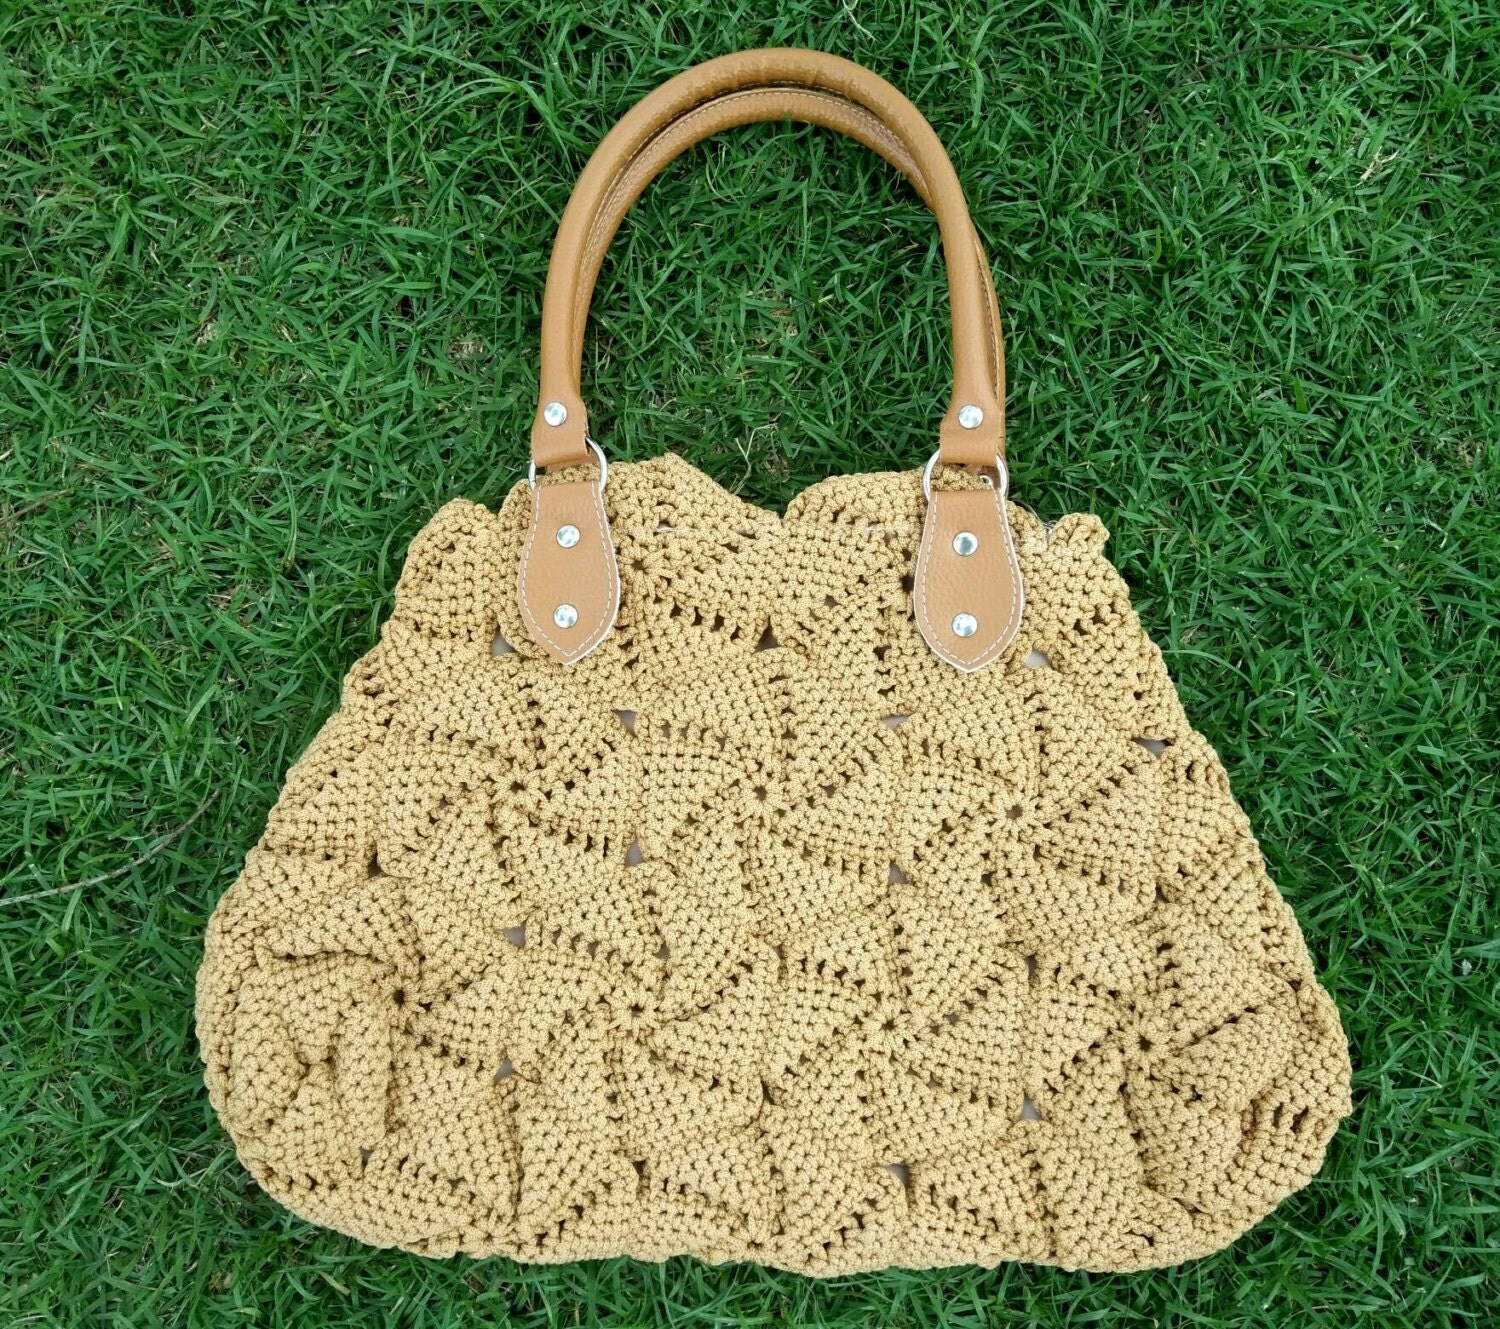 Crochet bag crochet bag and purses by SiriwanBag on Etsy